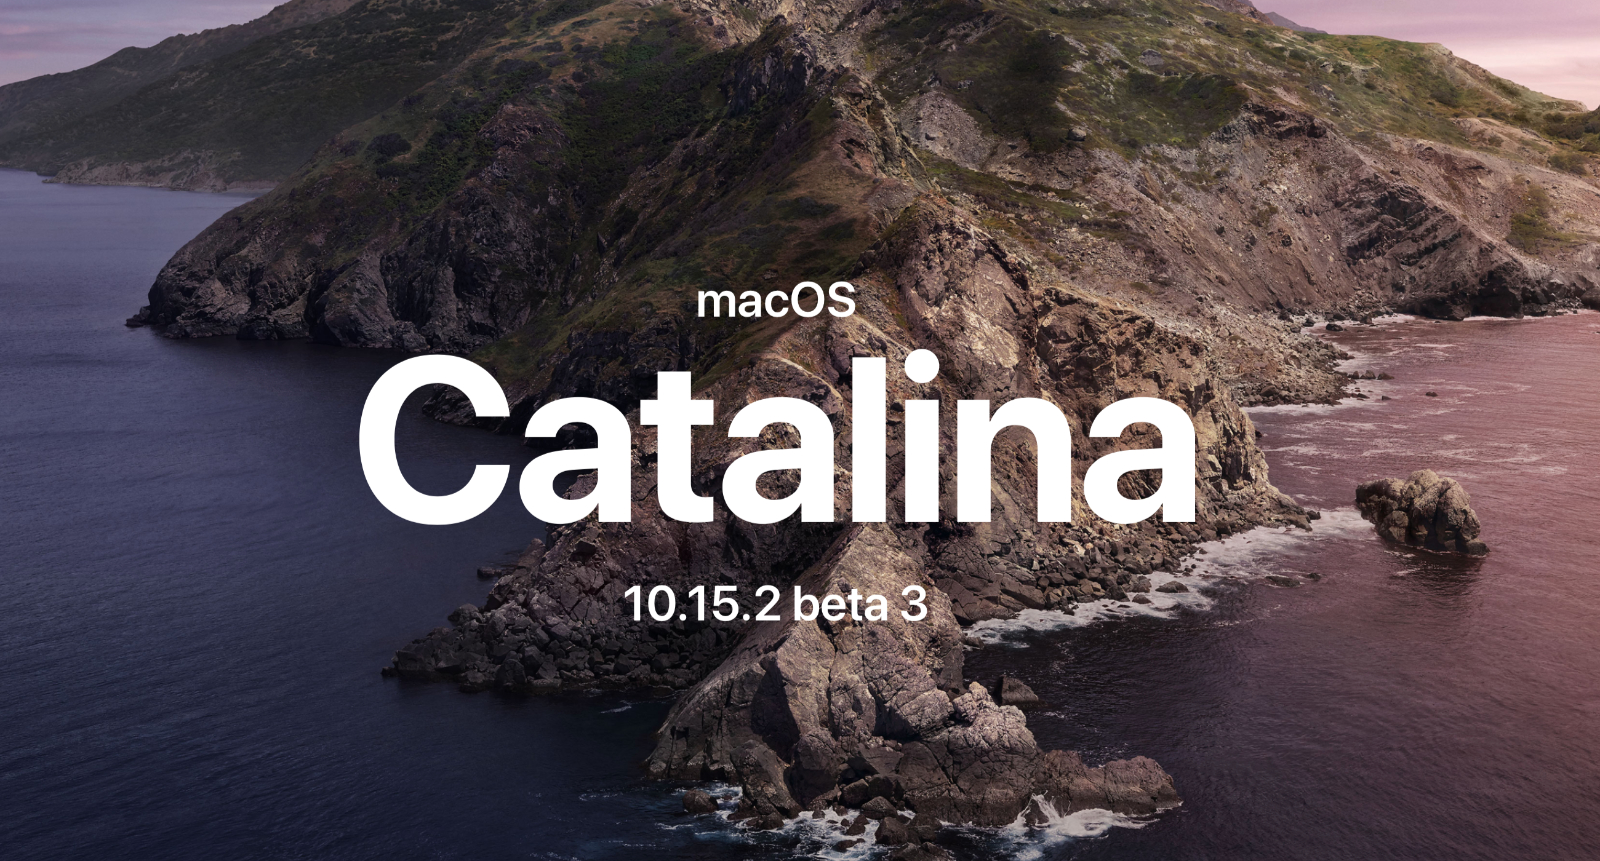 macOS Catalina 10.15.2 beta 3